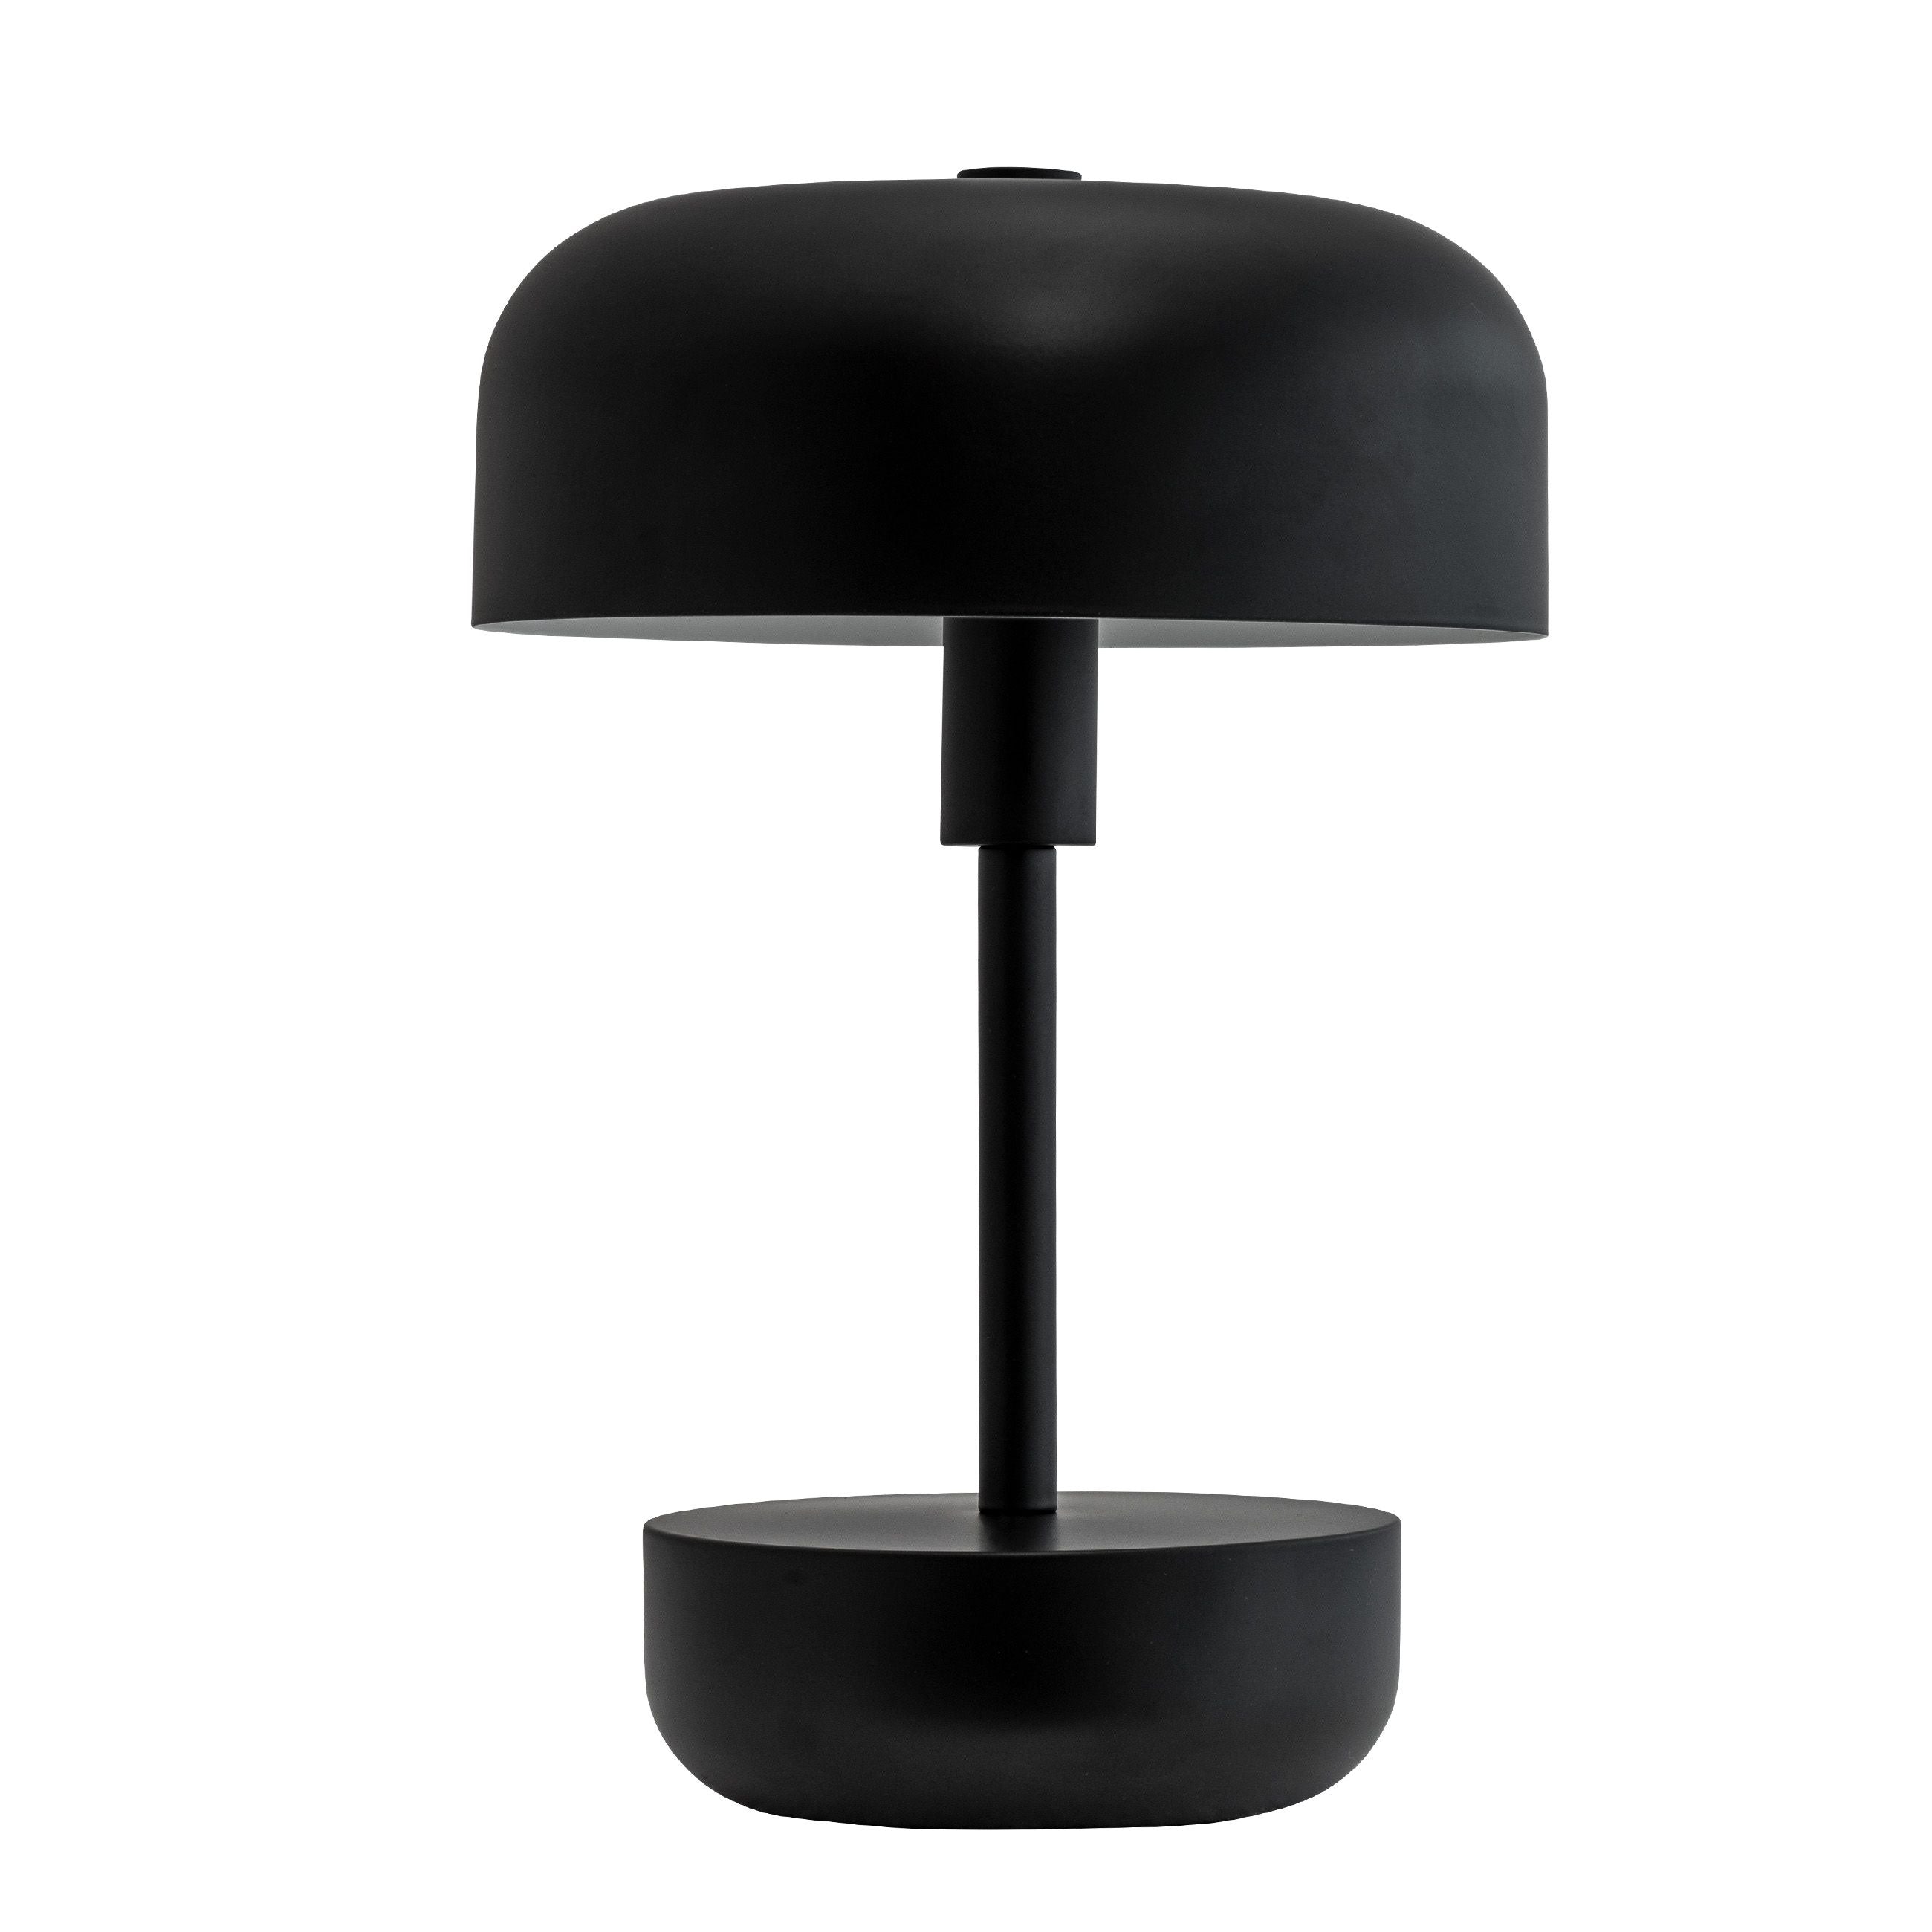 Dyberg Larsen haipot lampe de table rechargeable, noir